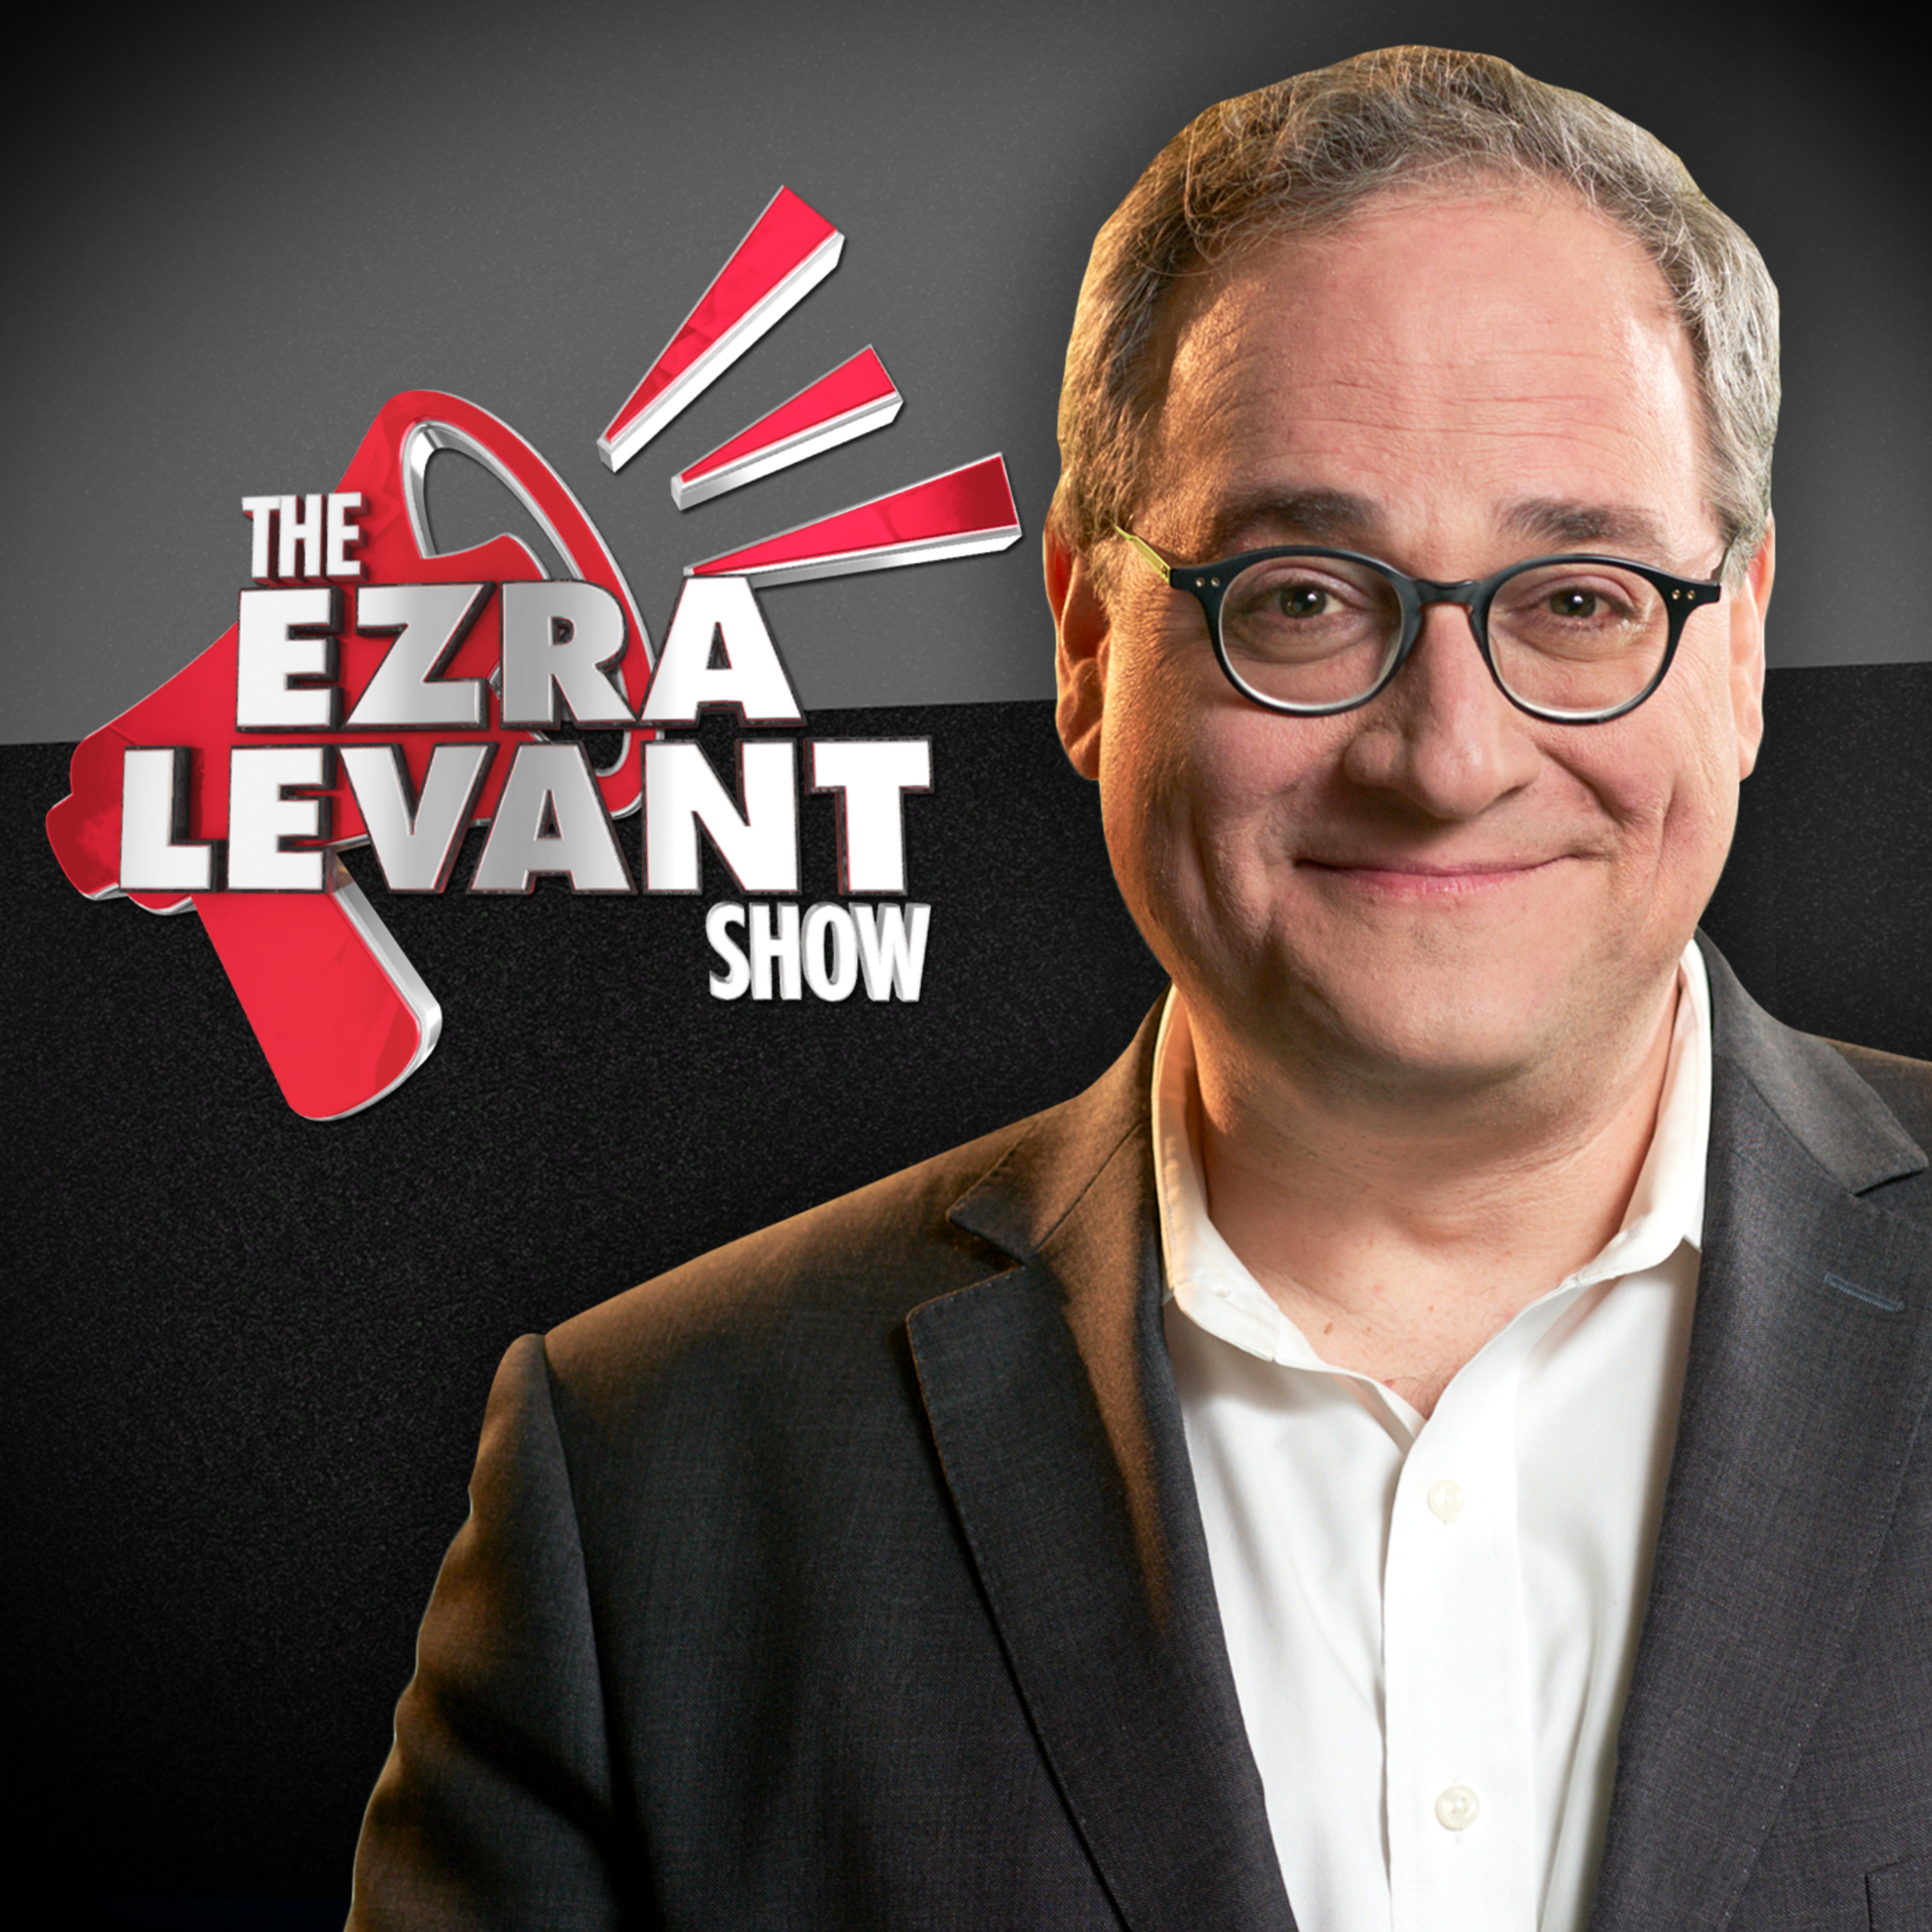 EZRA LEVANT | An unprecedented FBI raid on Donald Trump's home — has the deep state gone too far?